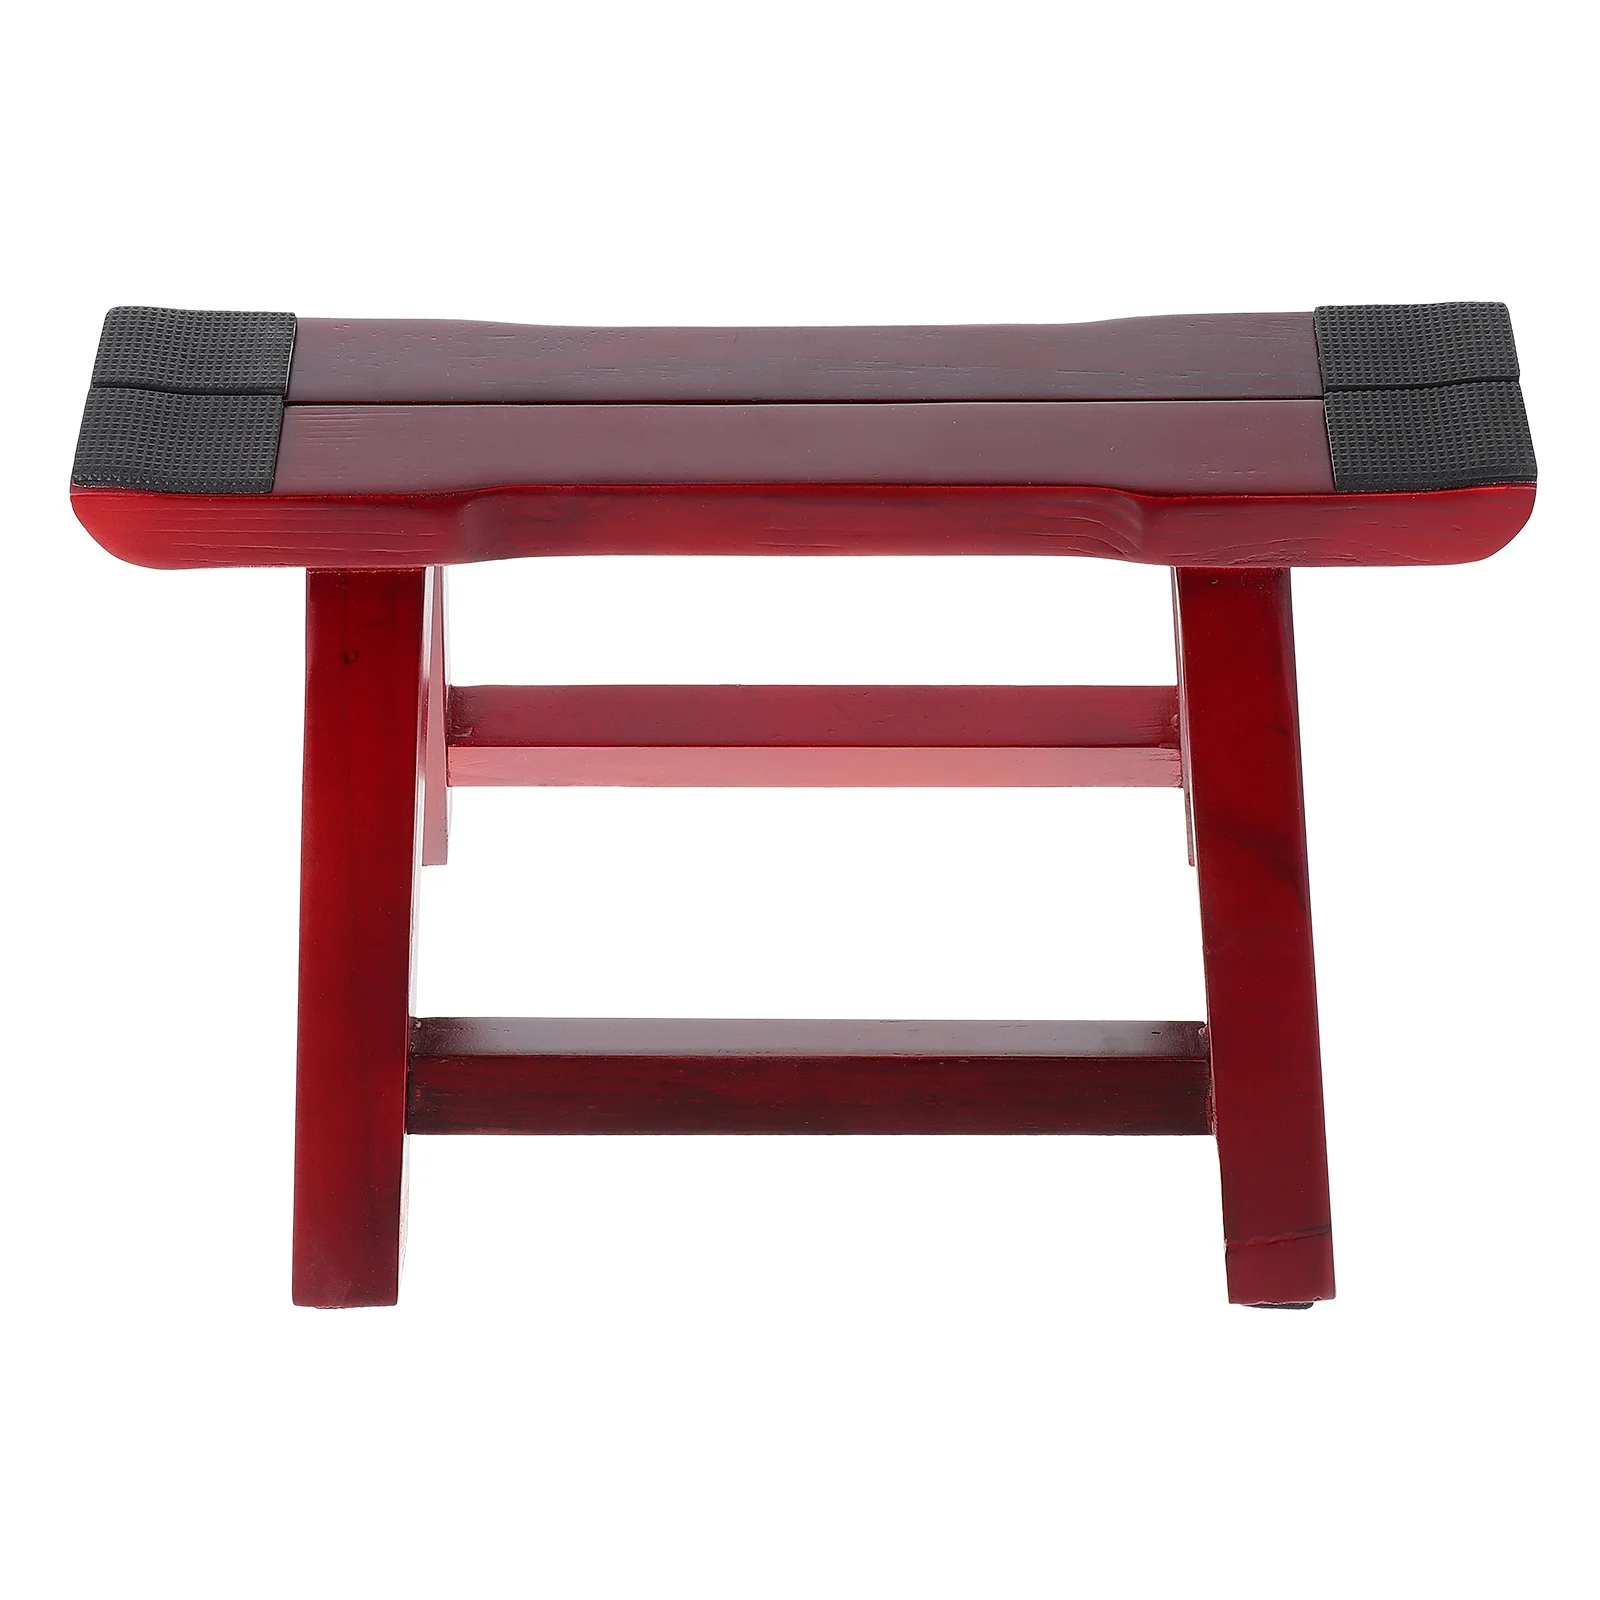 

Keyboard Stands Guzheng Qin Wood Shelf Rack A-shaped Portable 37X26X19.5 Red Wooden